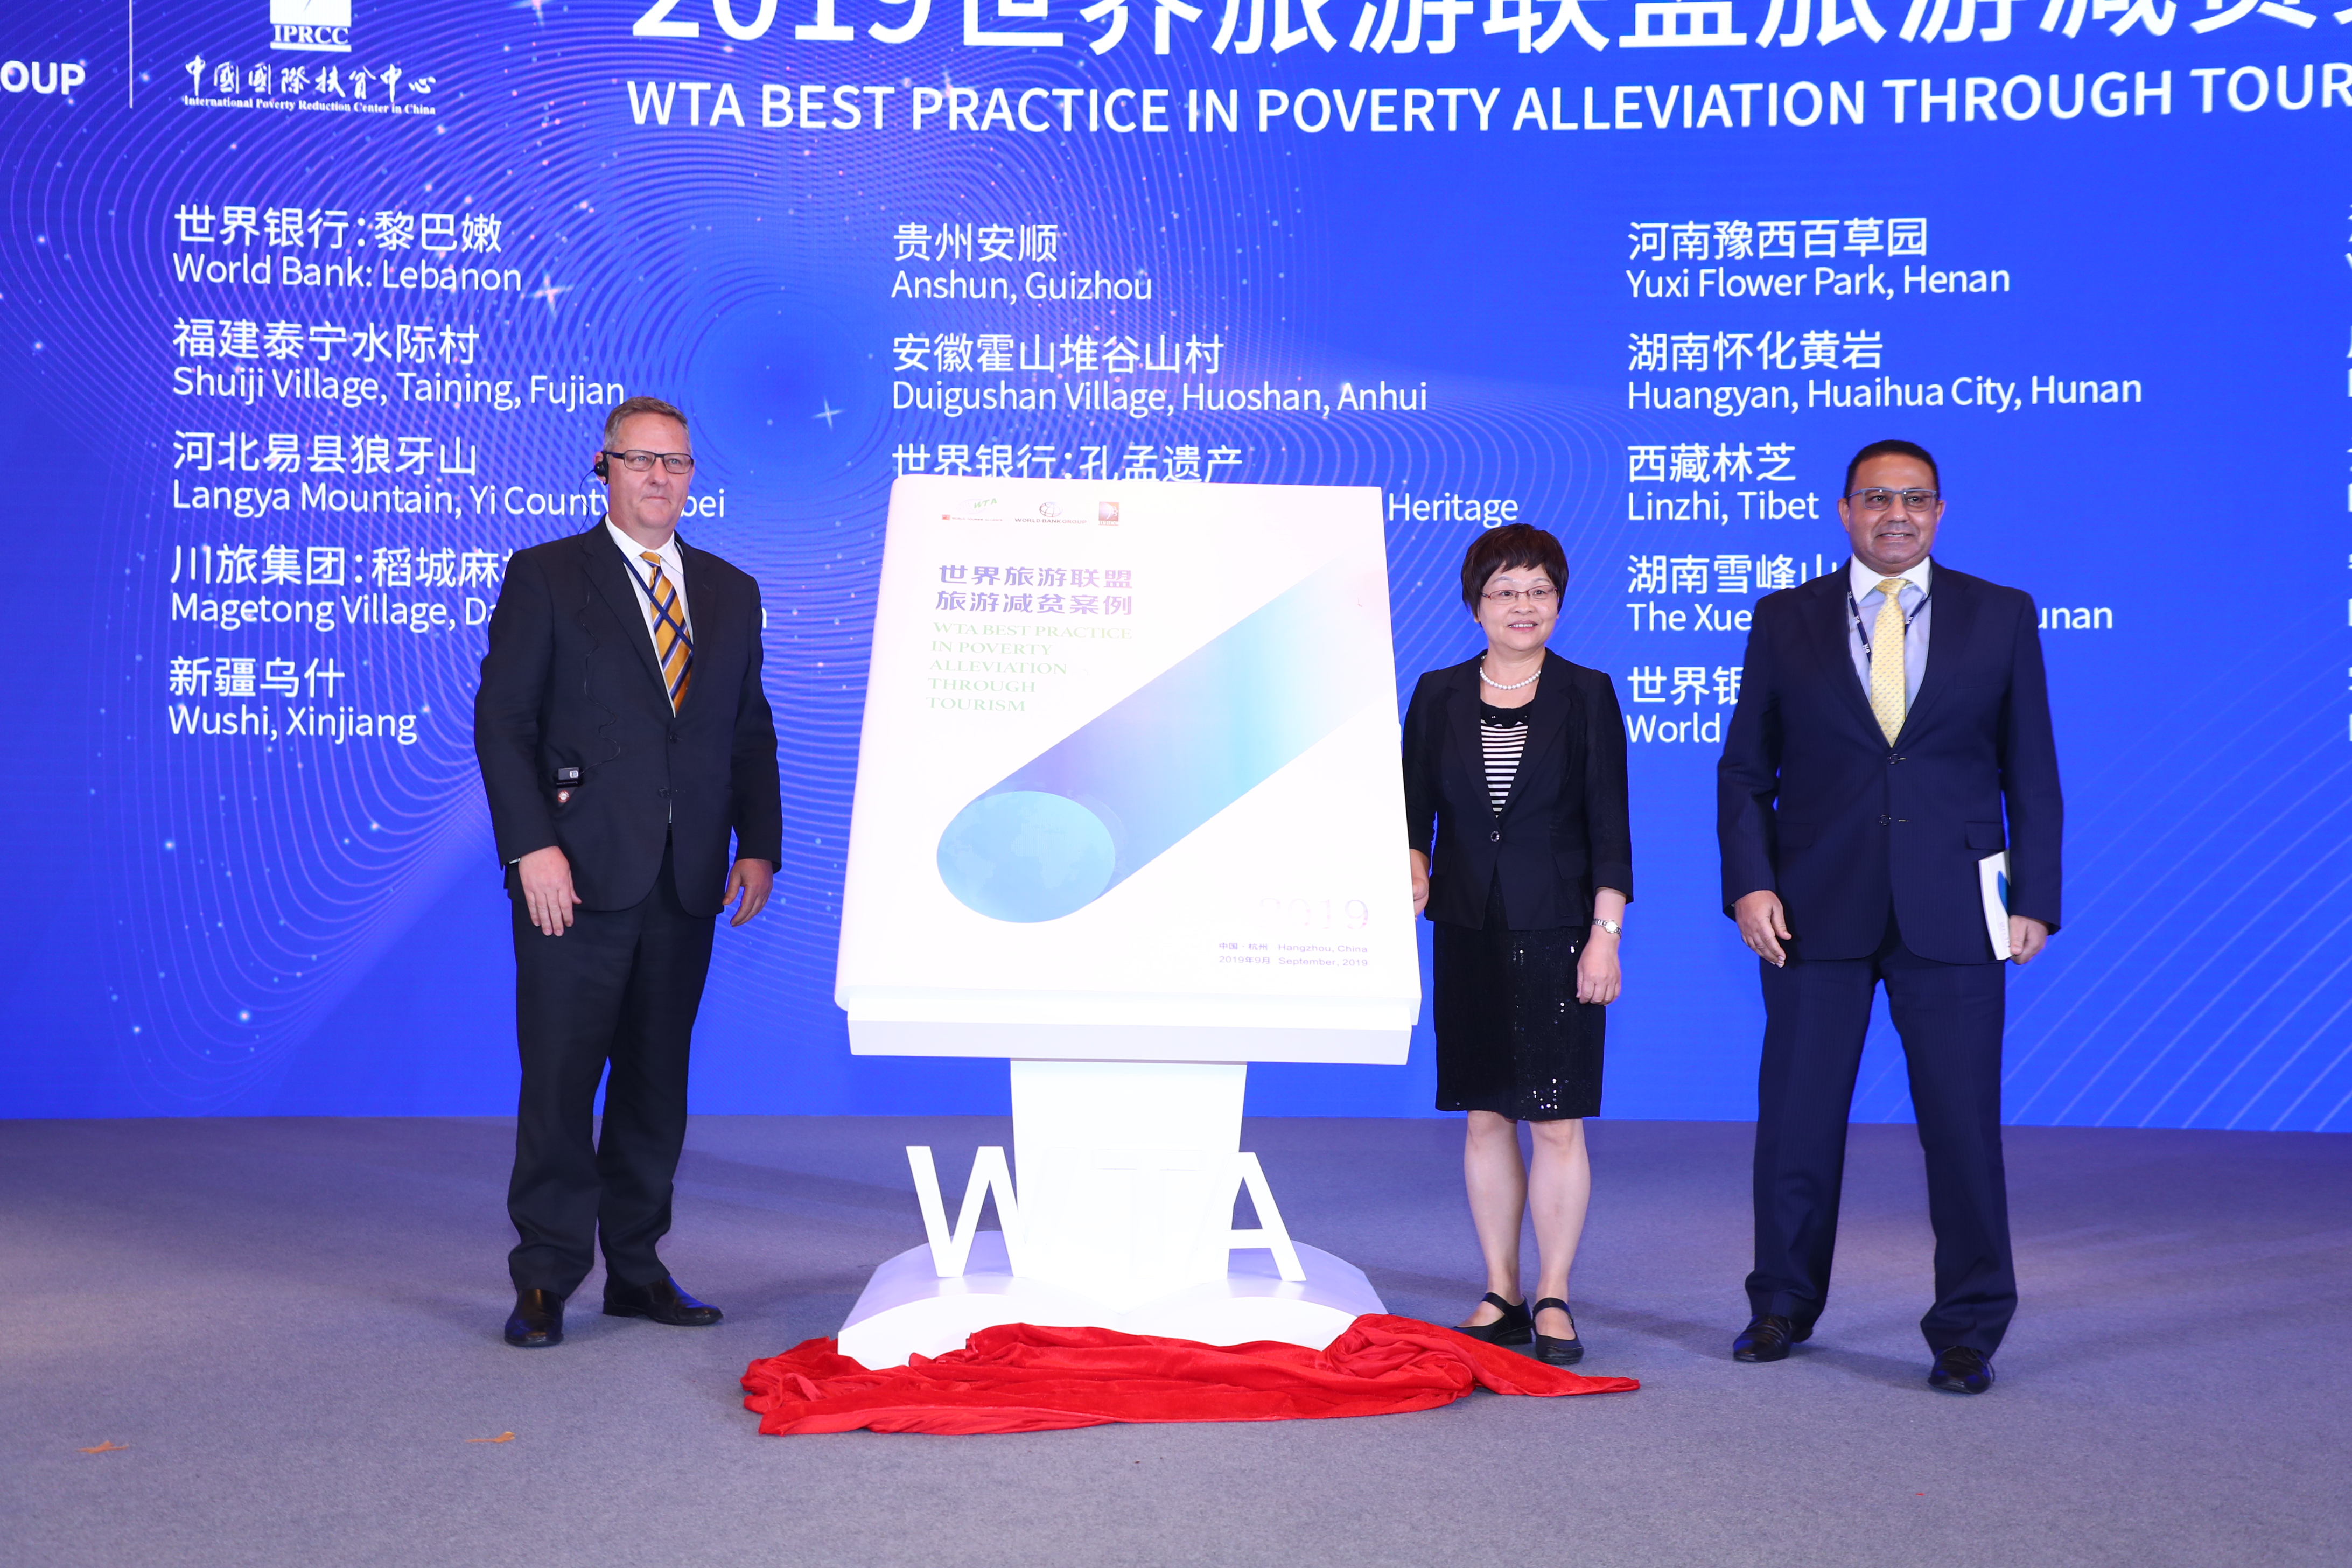 WTA Best Practice in Poverty Alleviation through Tourism 2019